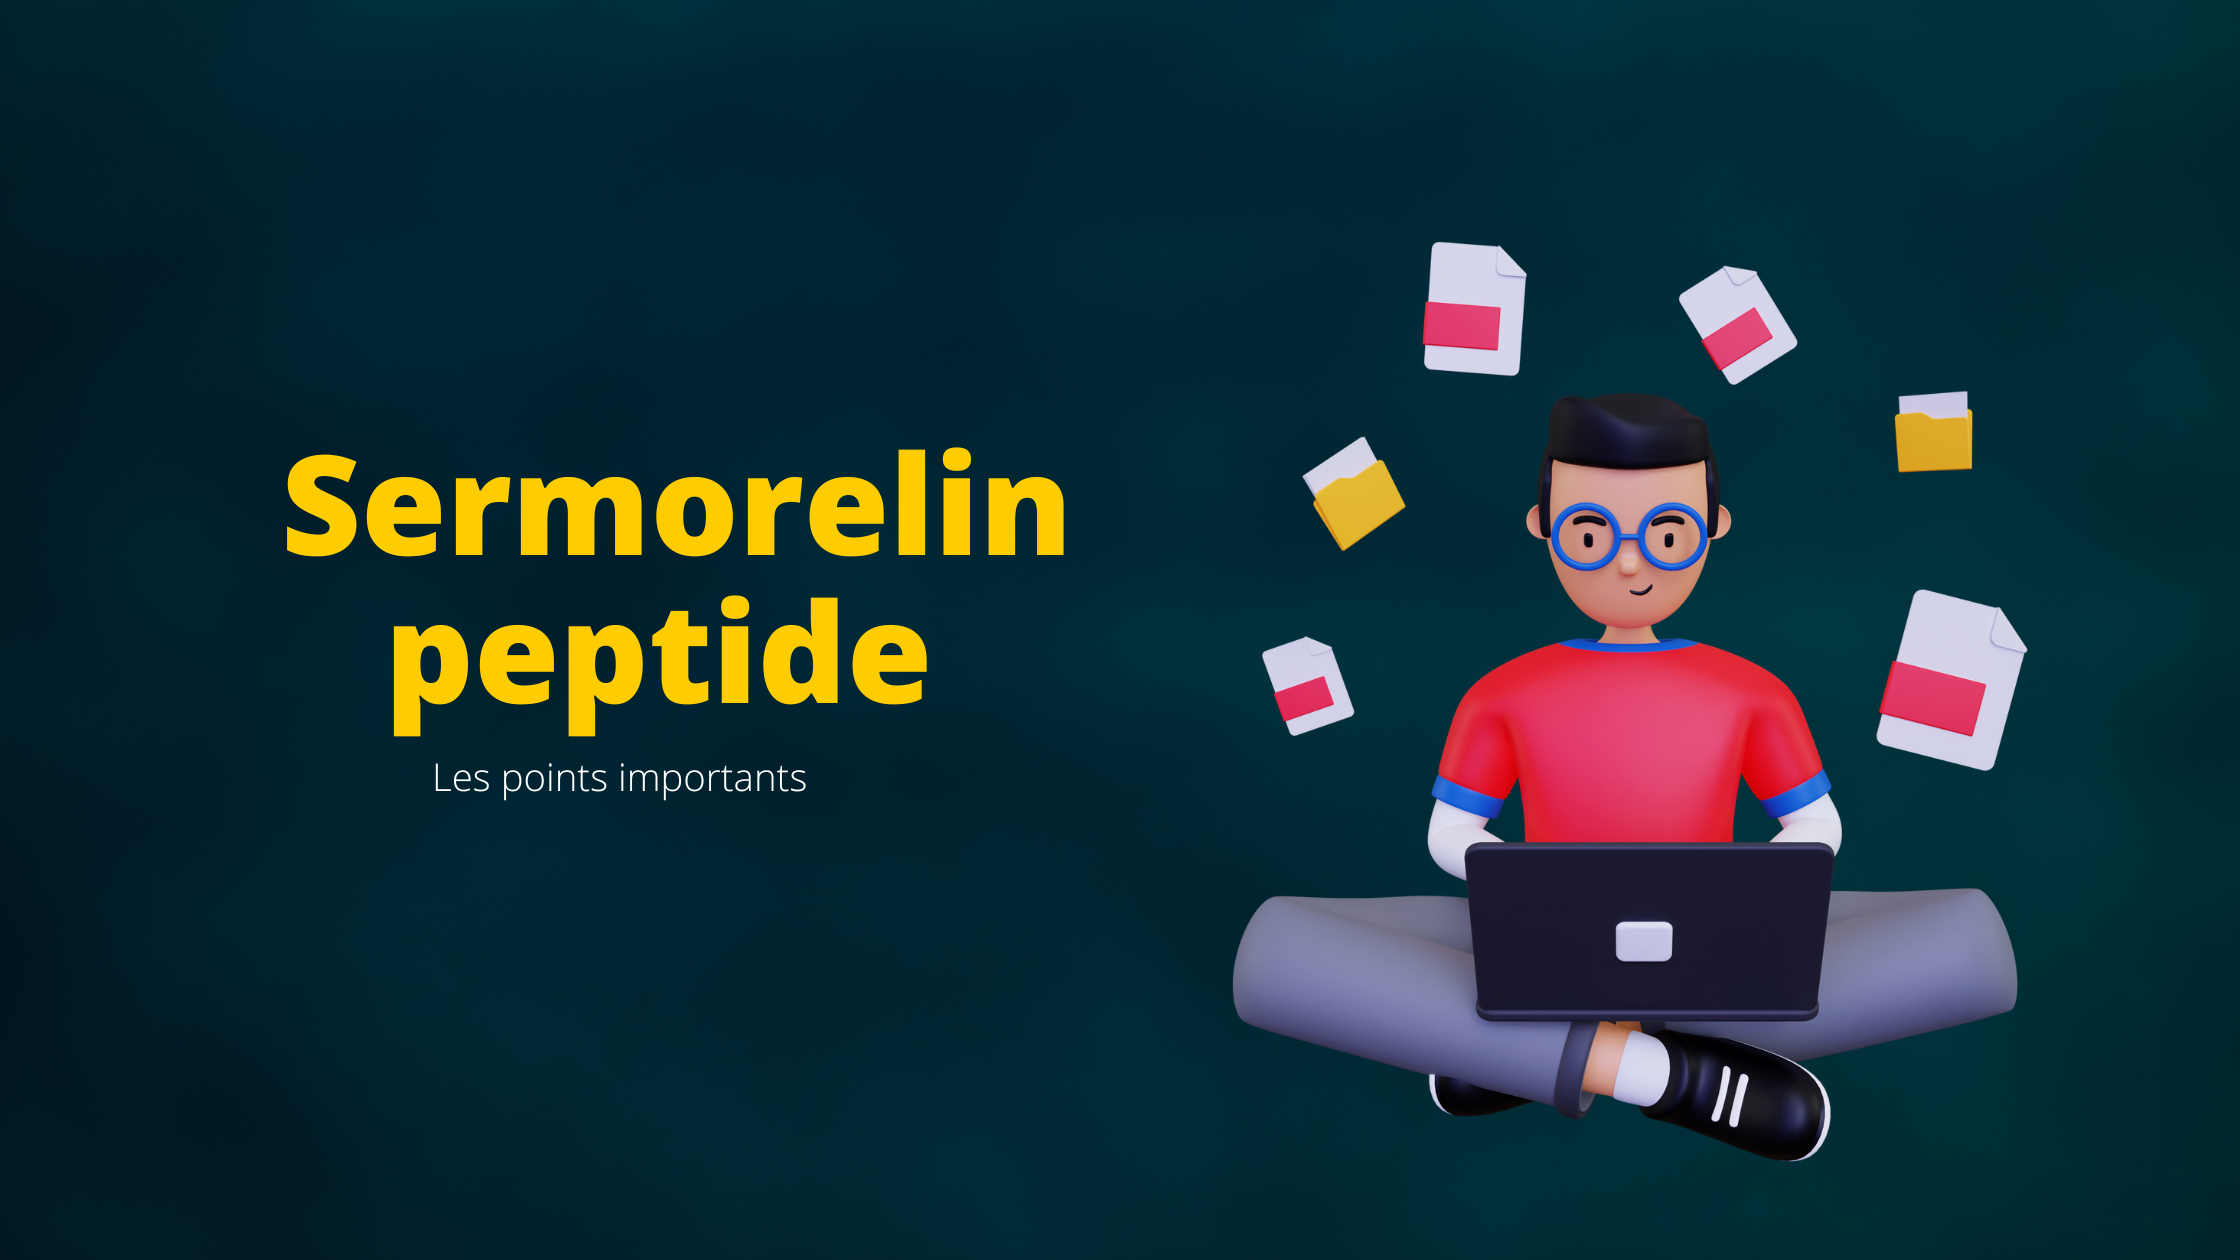 Sermorelin peptide | Les points importants